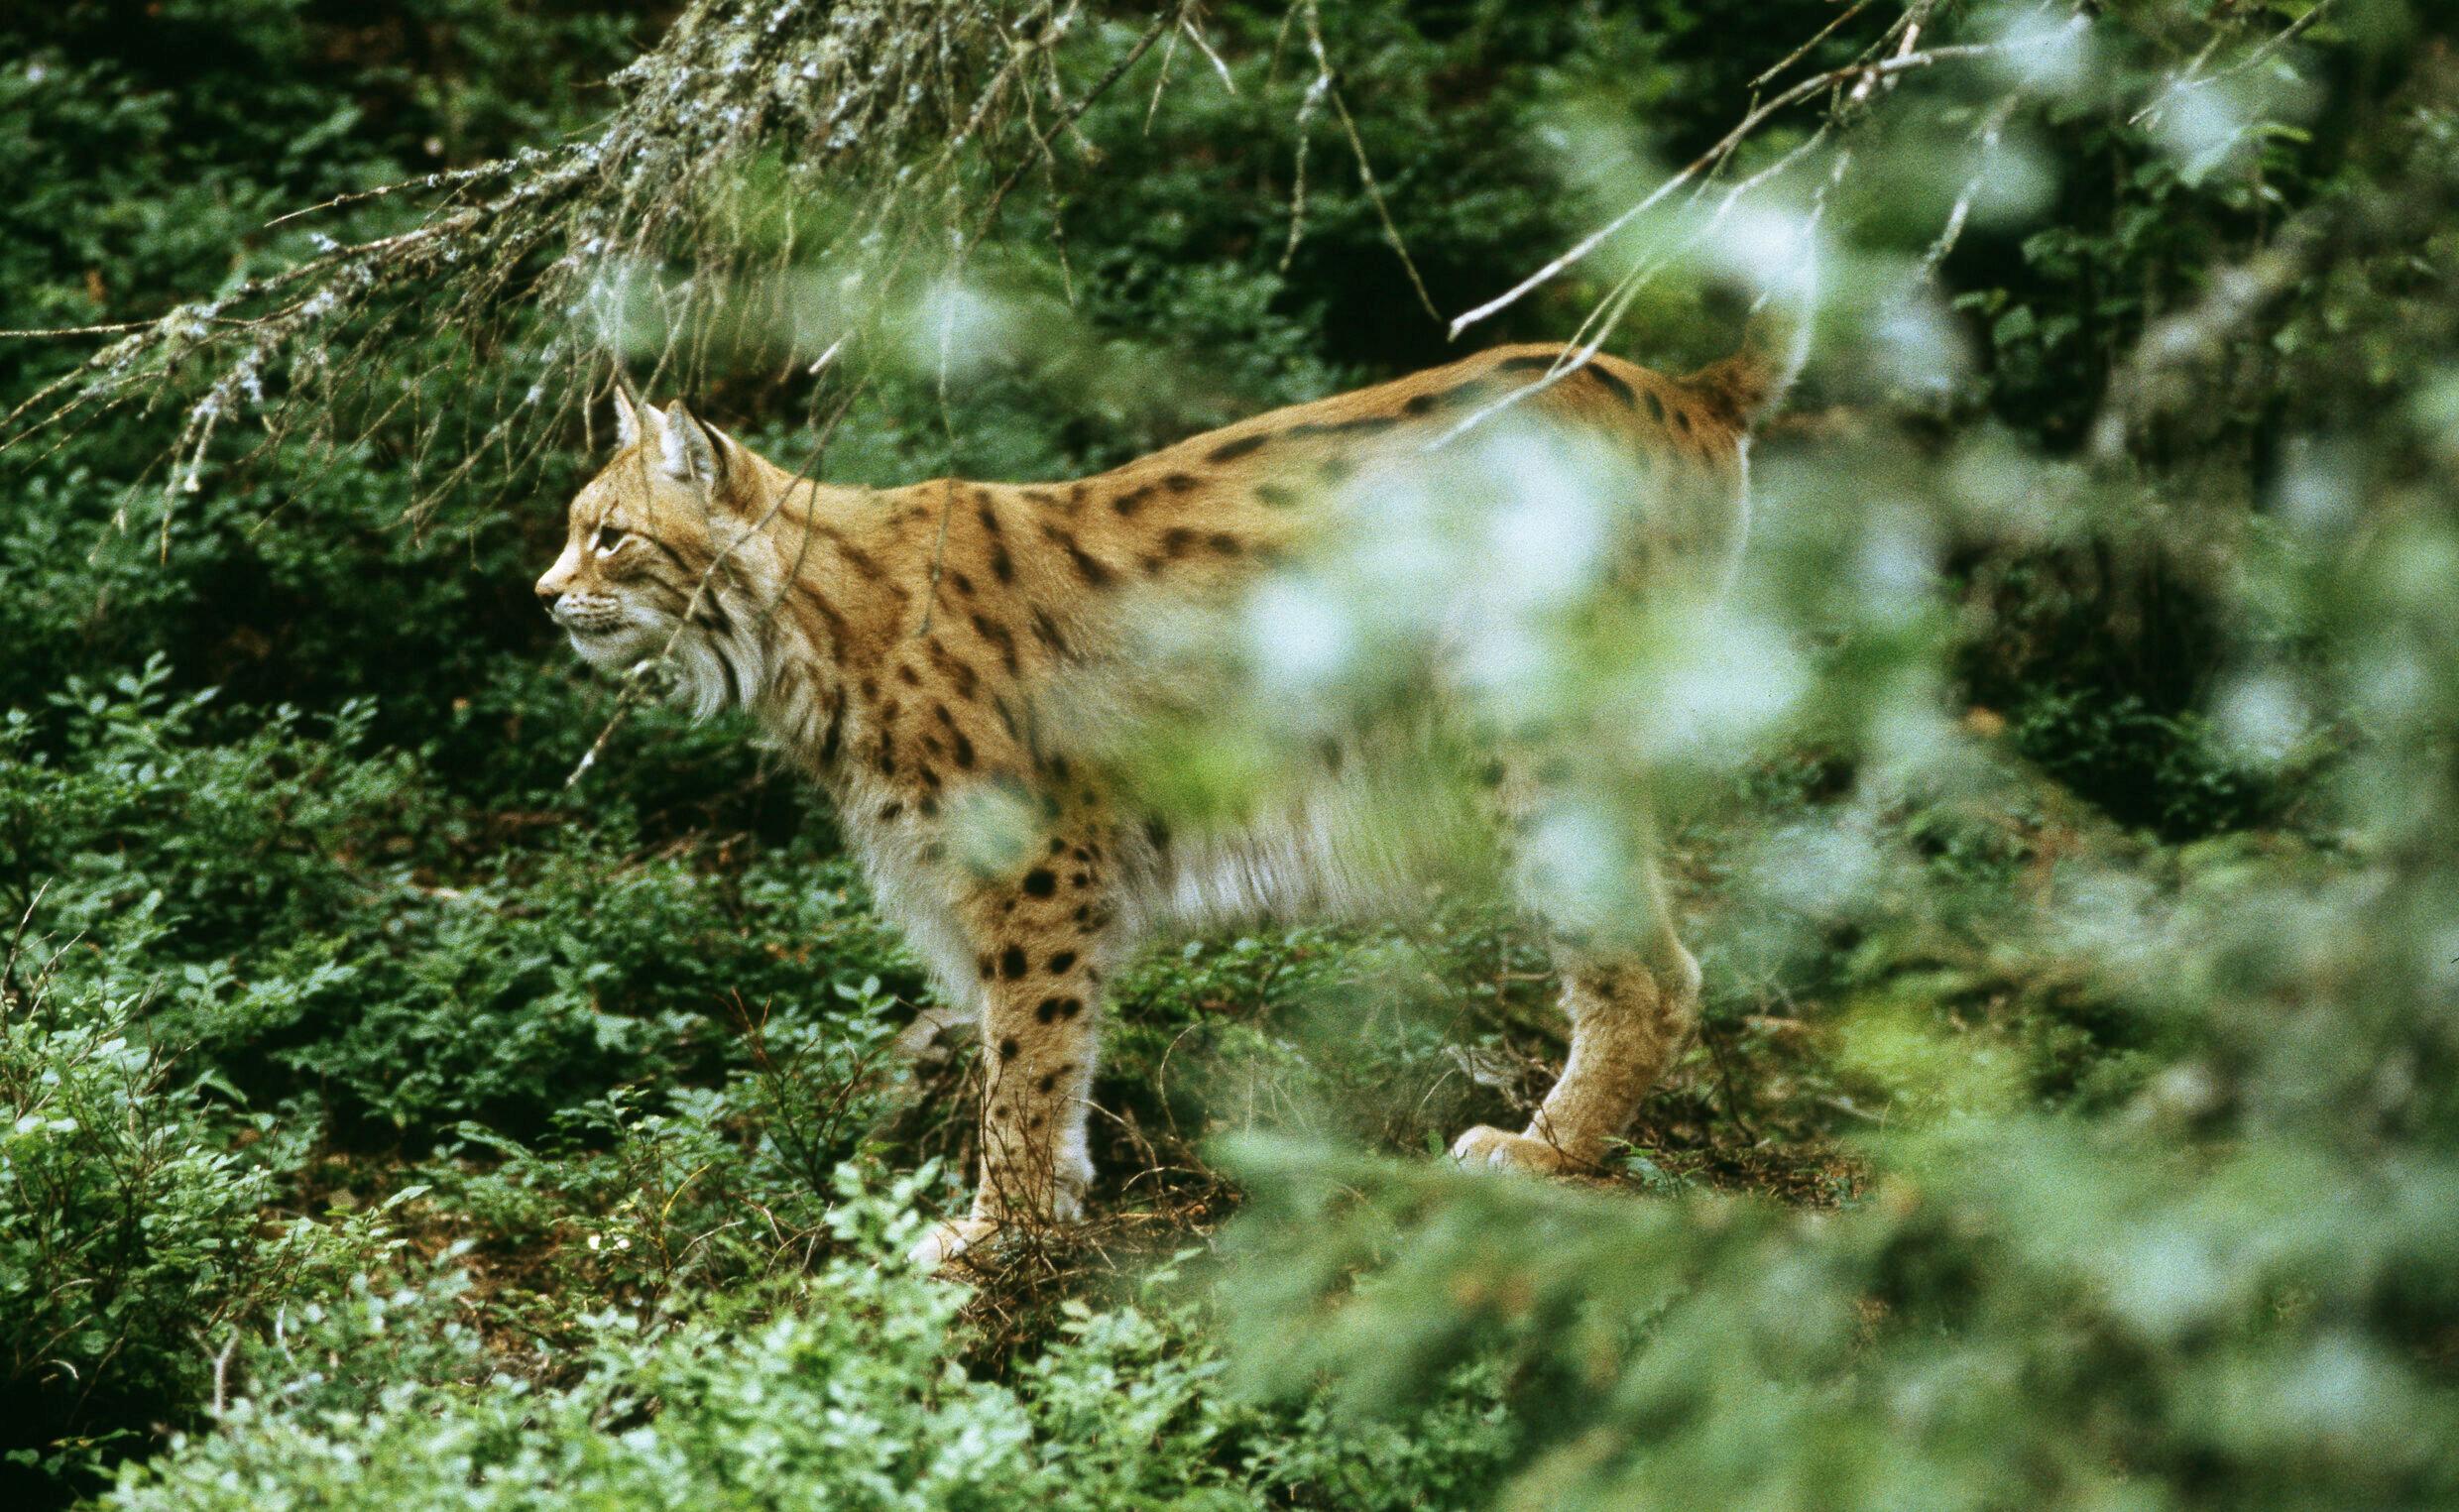 A lynx in greenery.